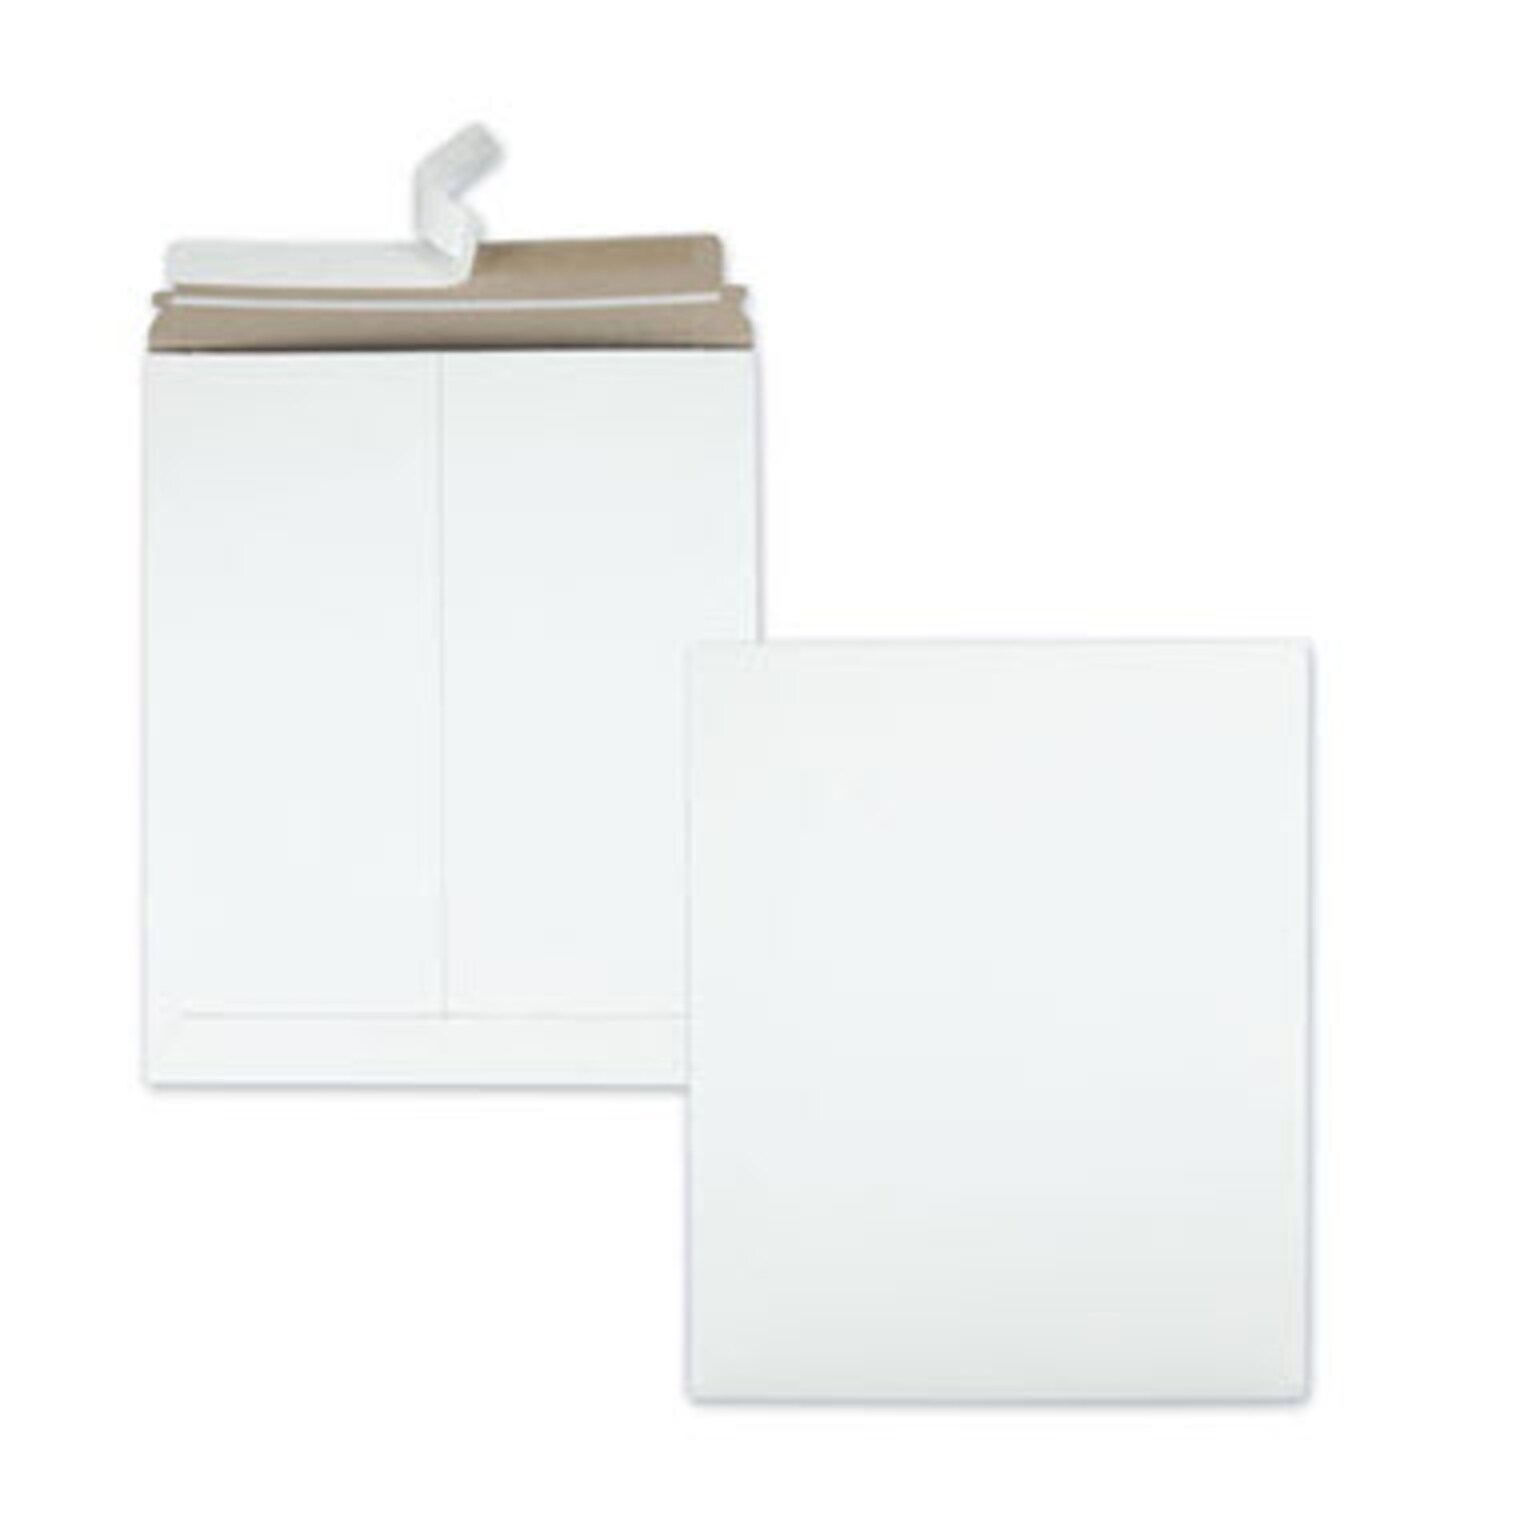 Extra-Rigid Photo/Document Mailer, Cheese Blade Flap, Self-Adhesive Closure, 11 x 13.5, White, 25/Box